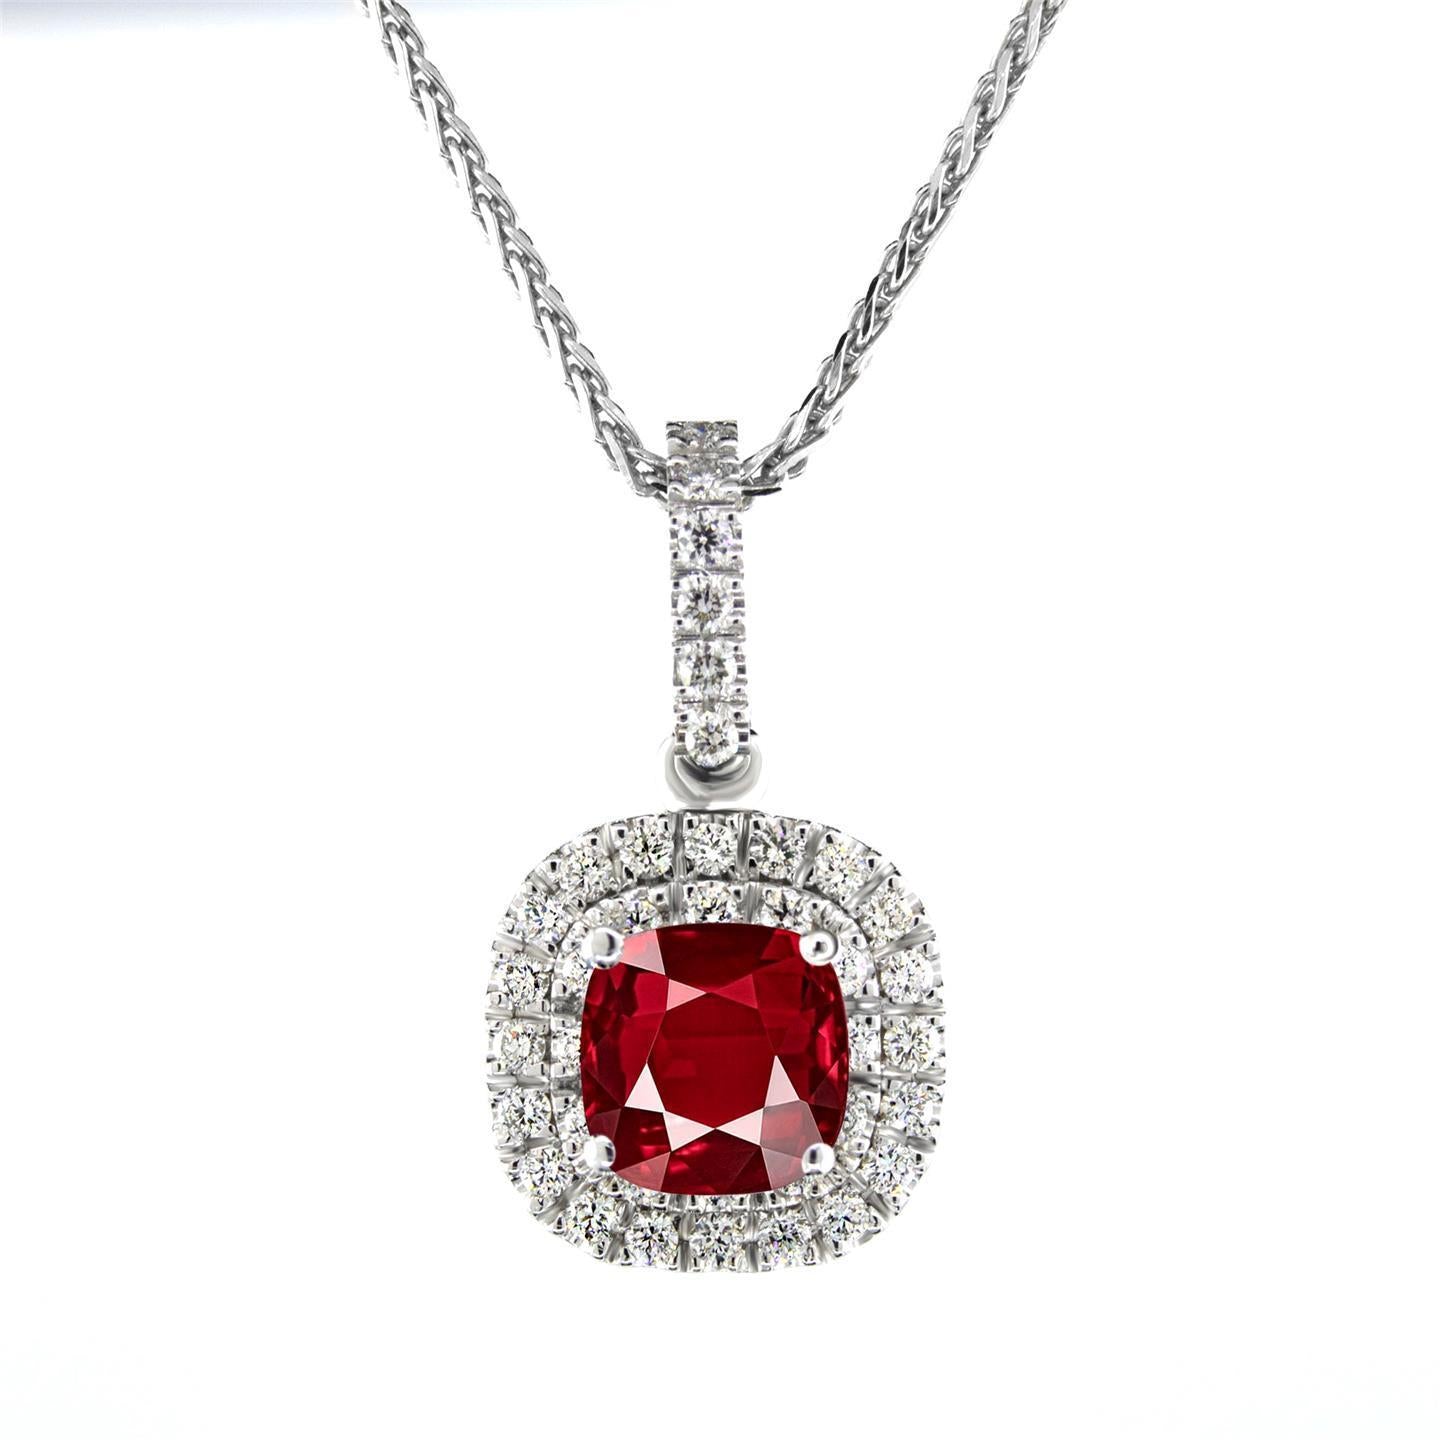 Lady white gold 14K red AAA cushion shaped ruby 4.00 carats diamond pendant